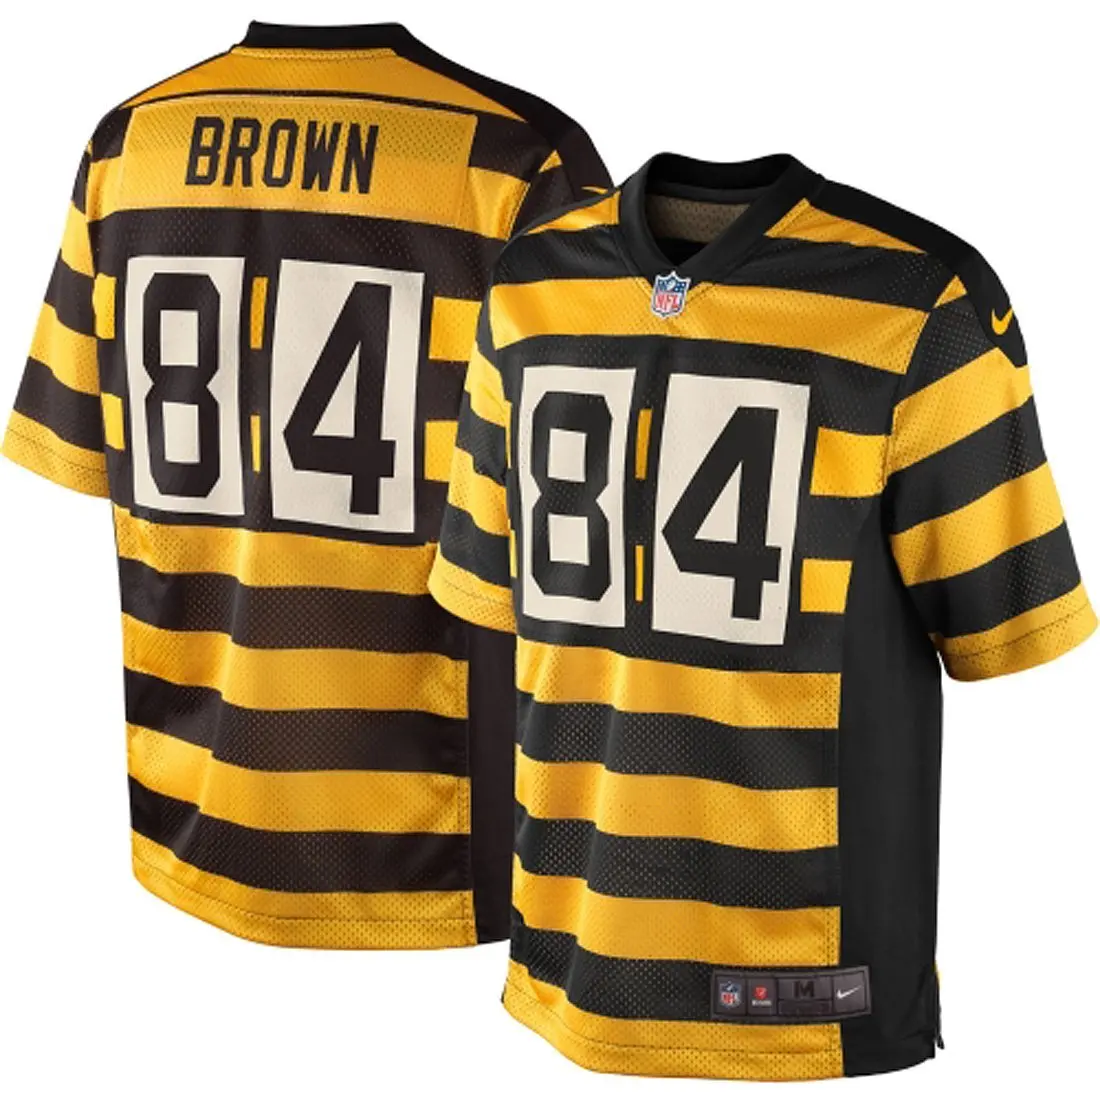 brown bumblebee jersey